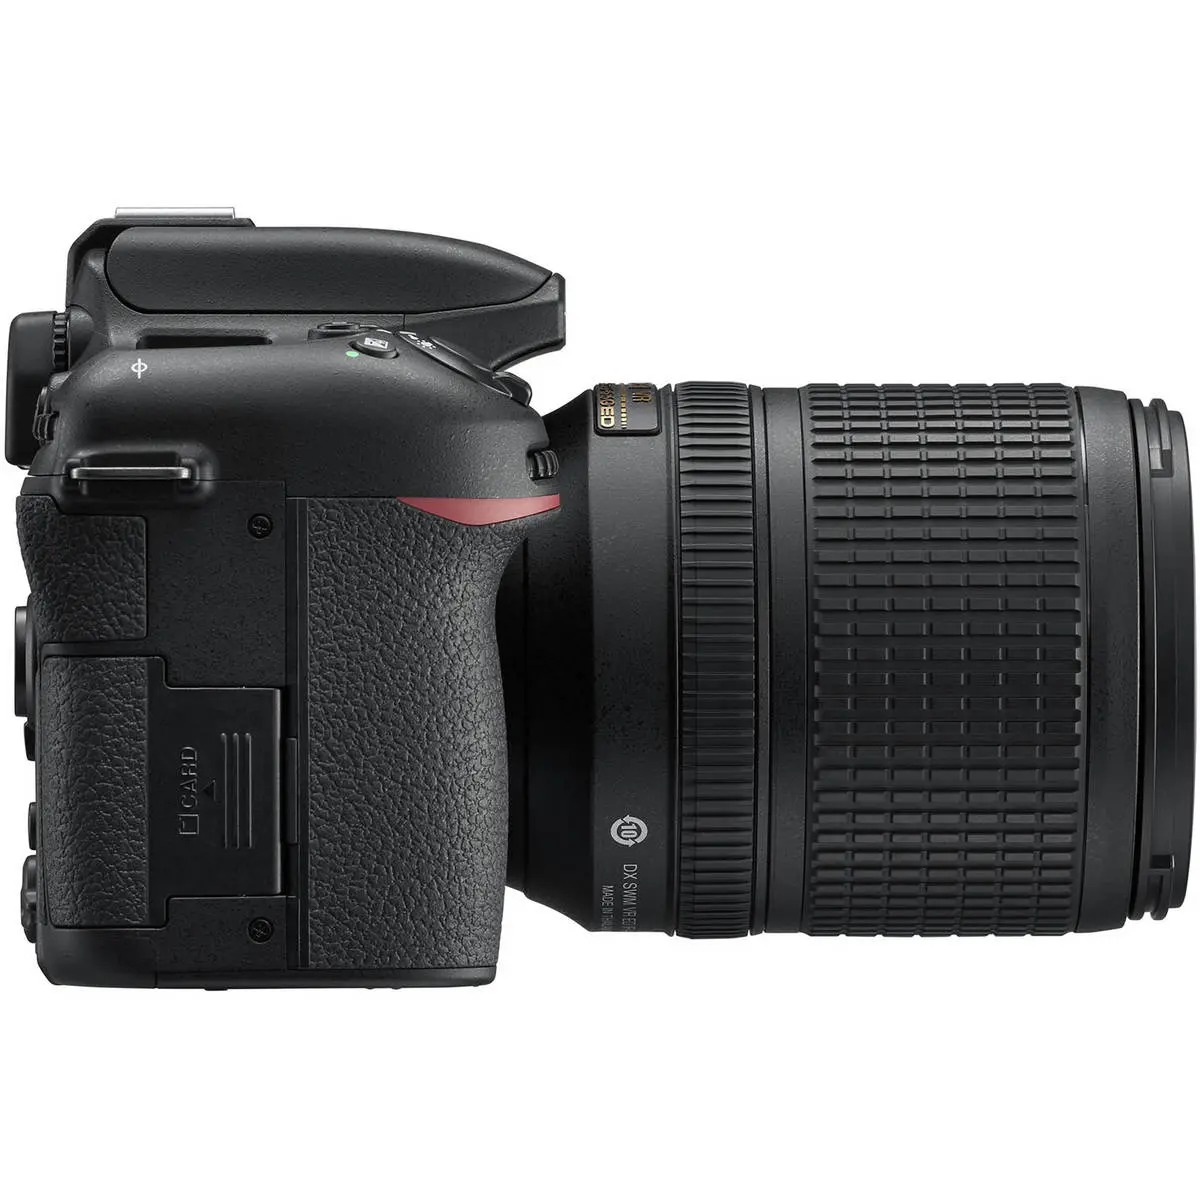 9. Nikon D7500 18-140 kit 20.9MP 4K UltraHD Digital SLR Camera